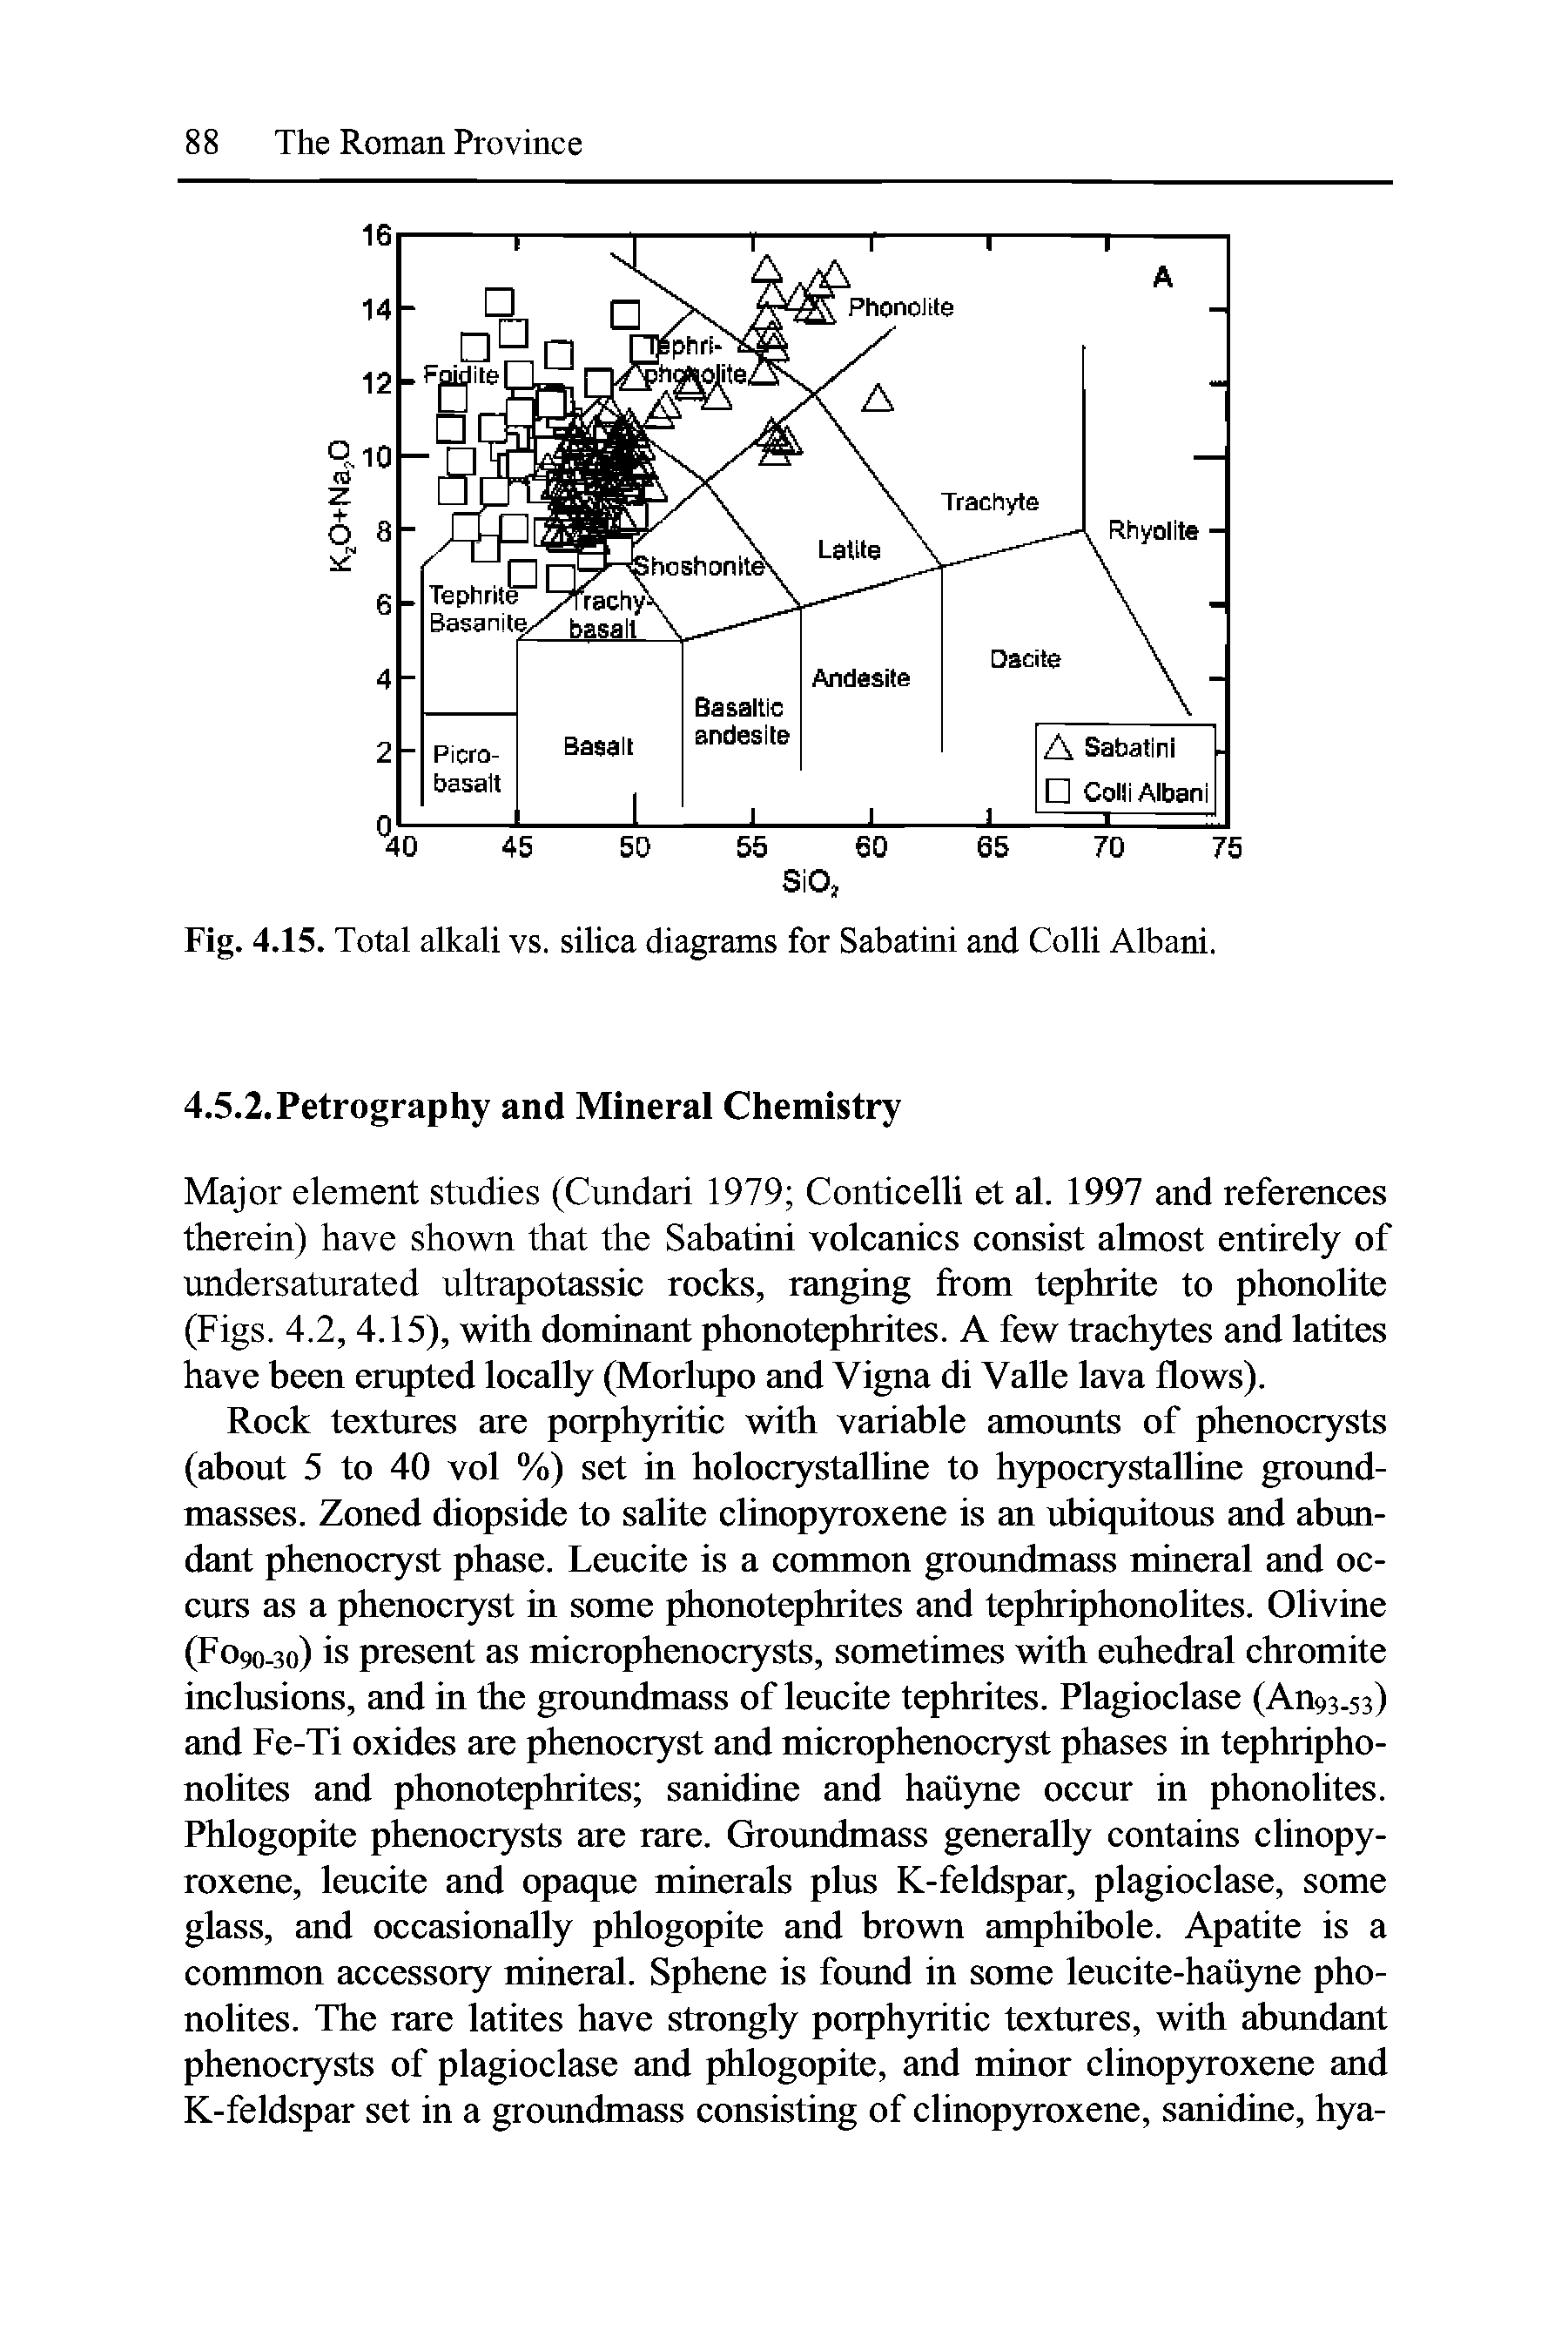 Fig. 4.15. Total alkali vs. silica diagrams for Sabatini and Colli Albani.